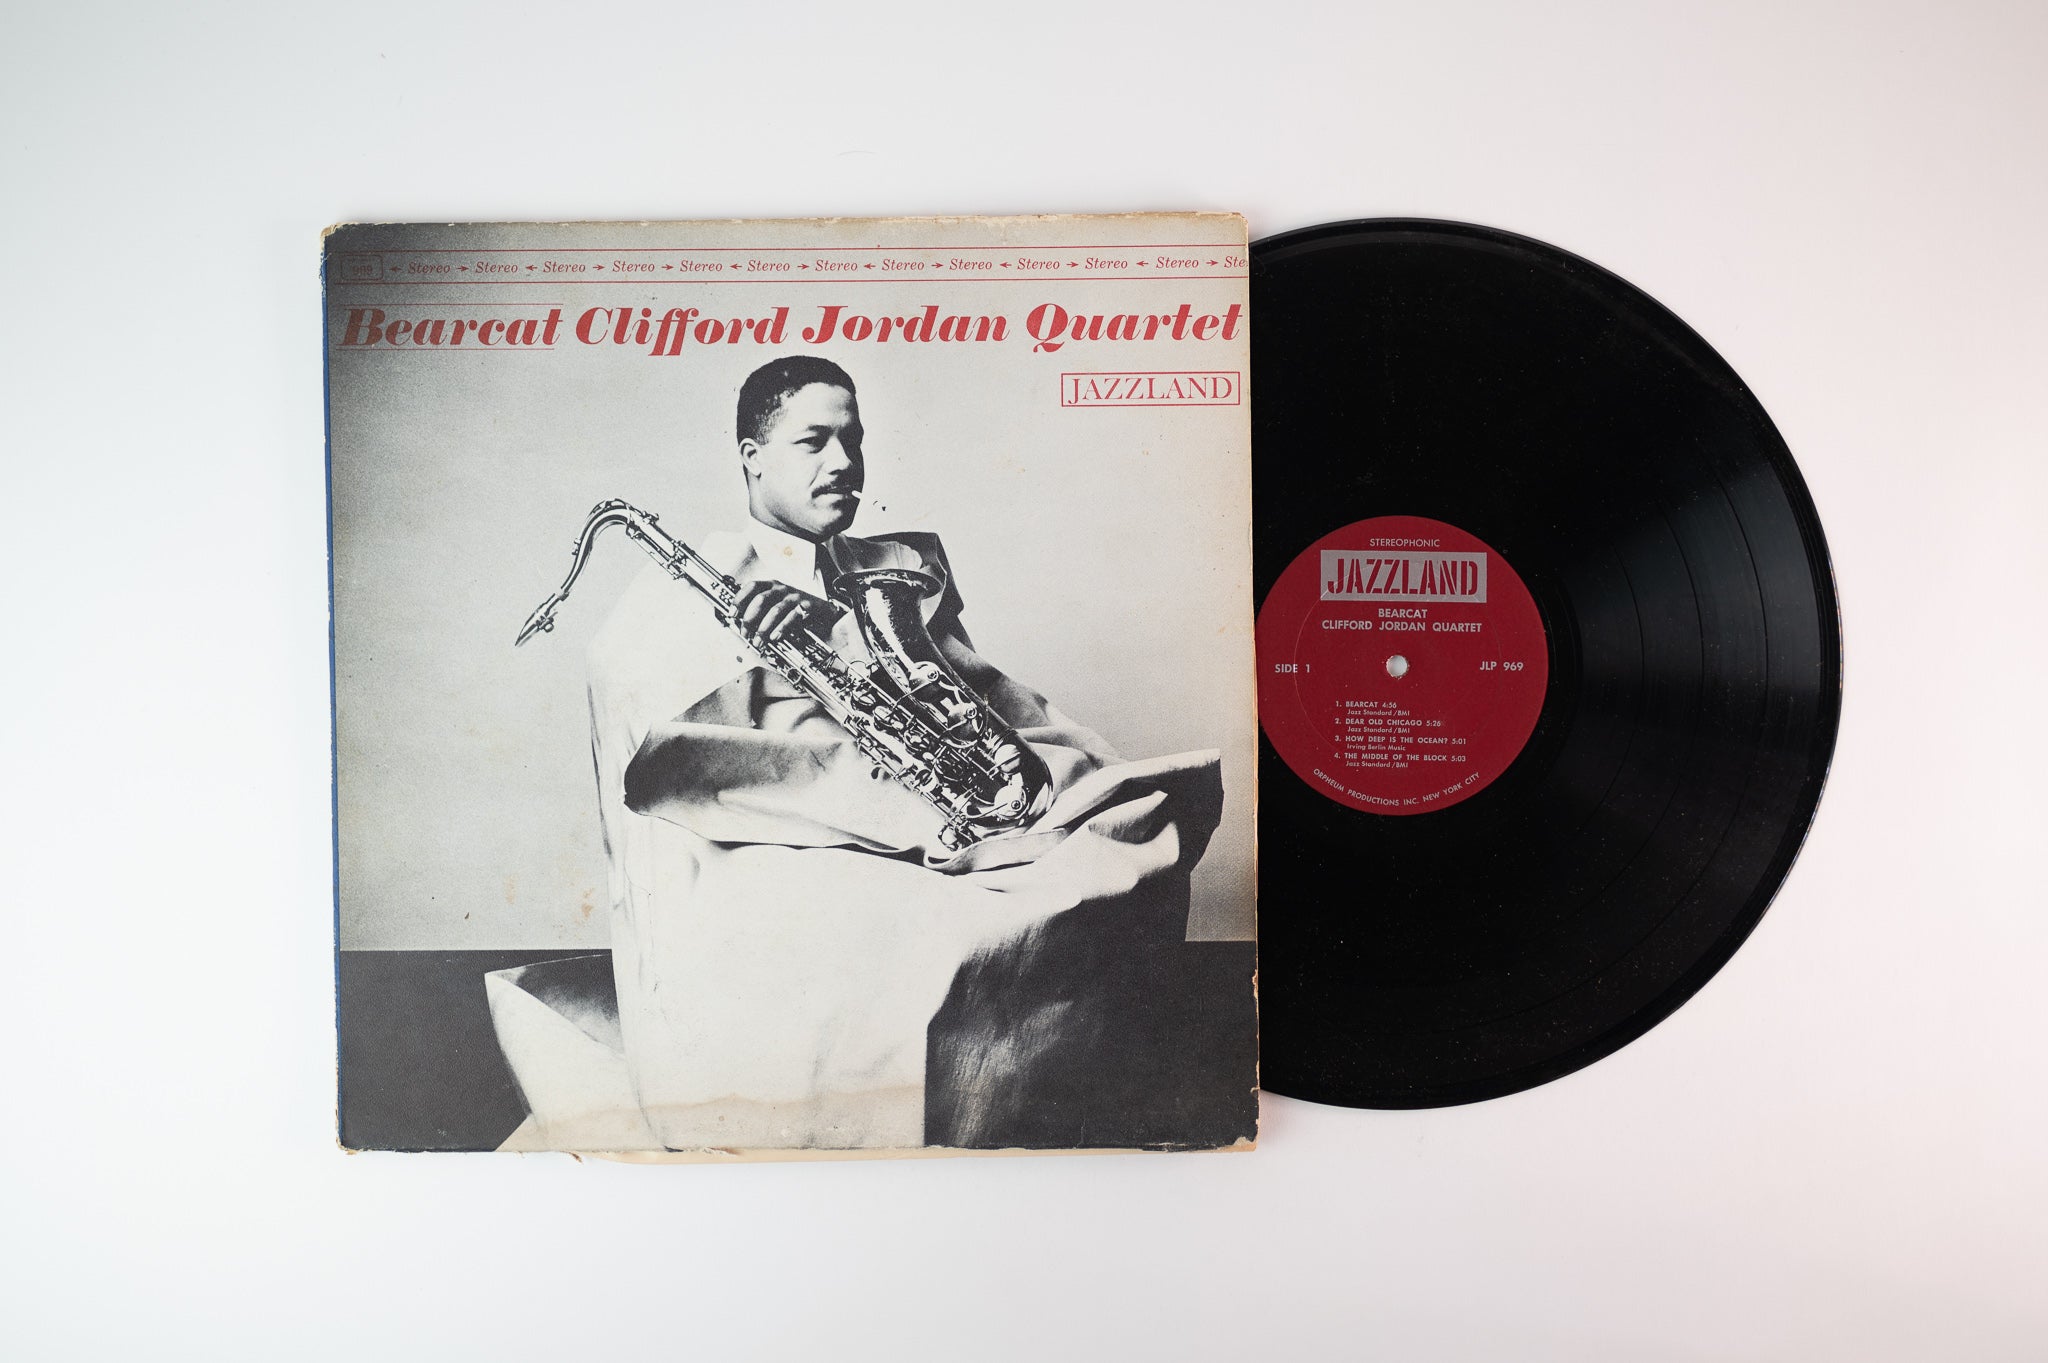 Clifford Jordan Quartet - Bearcat on Jazzland Stereo Orpheum Productions